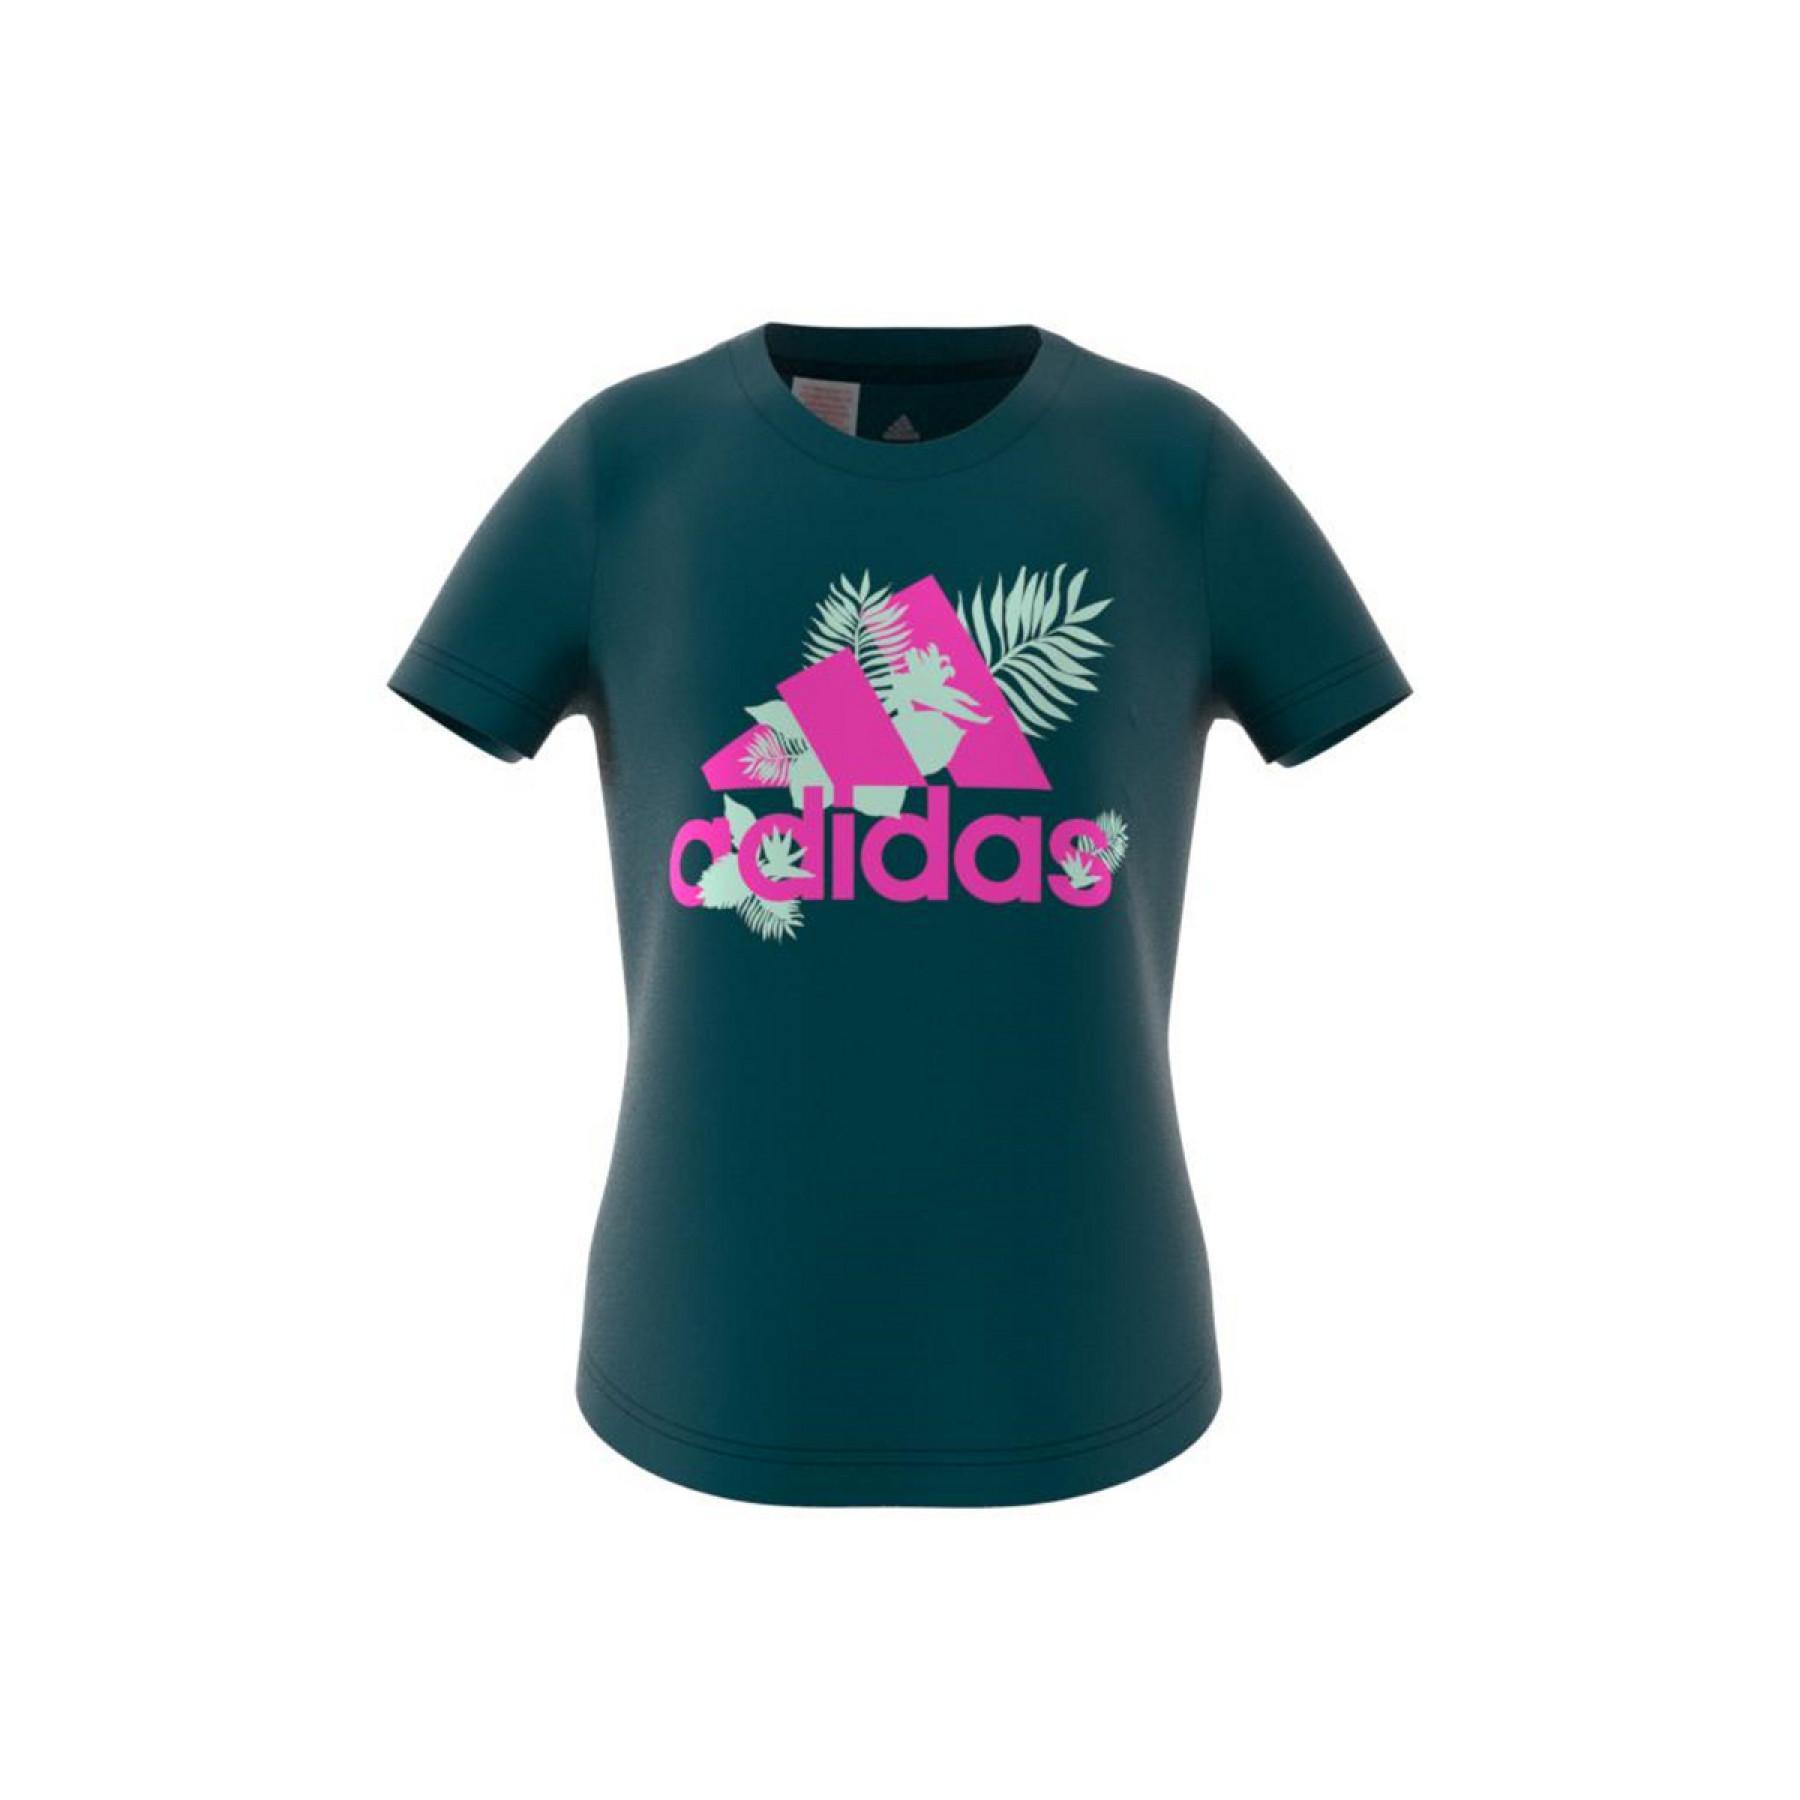 Child's T-shirt adidas Sports